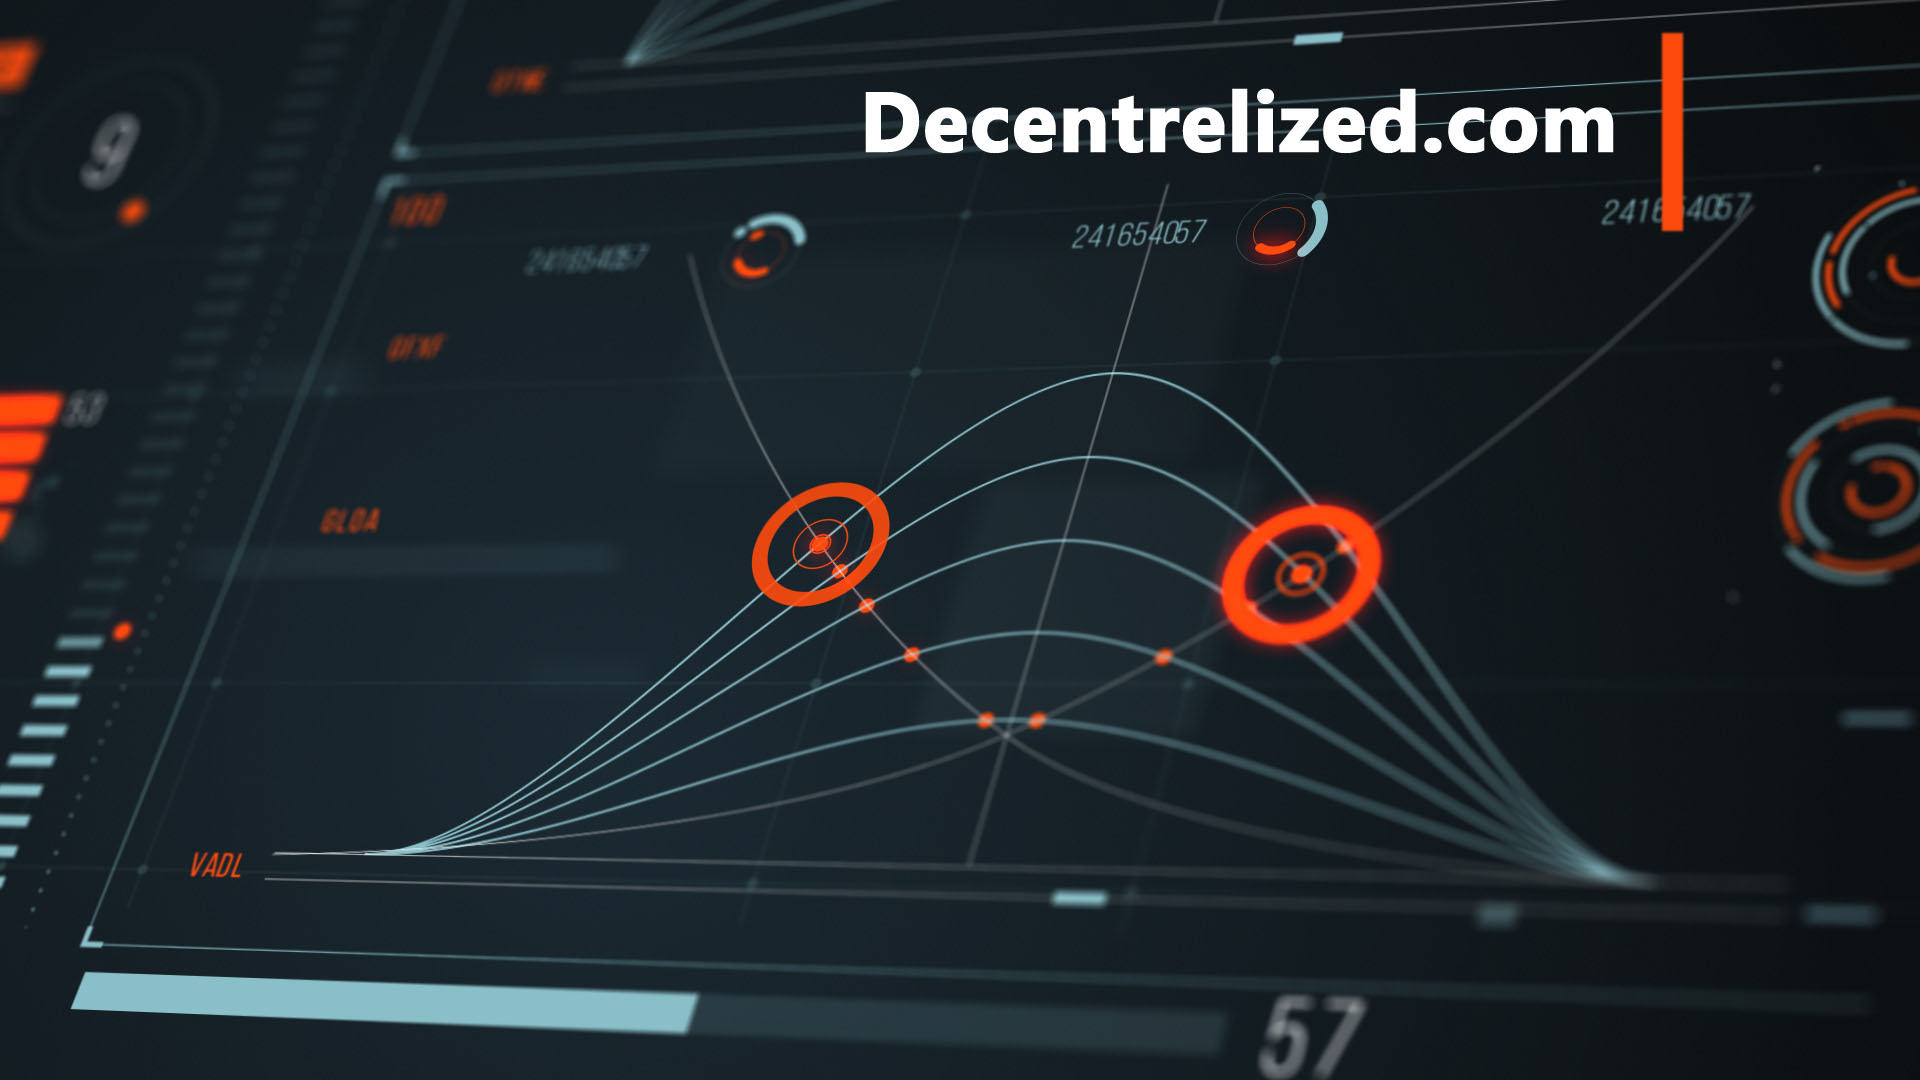 Decenterlized-web-logo.jpg